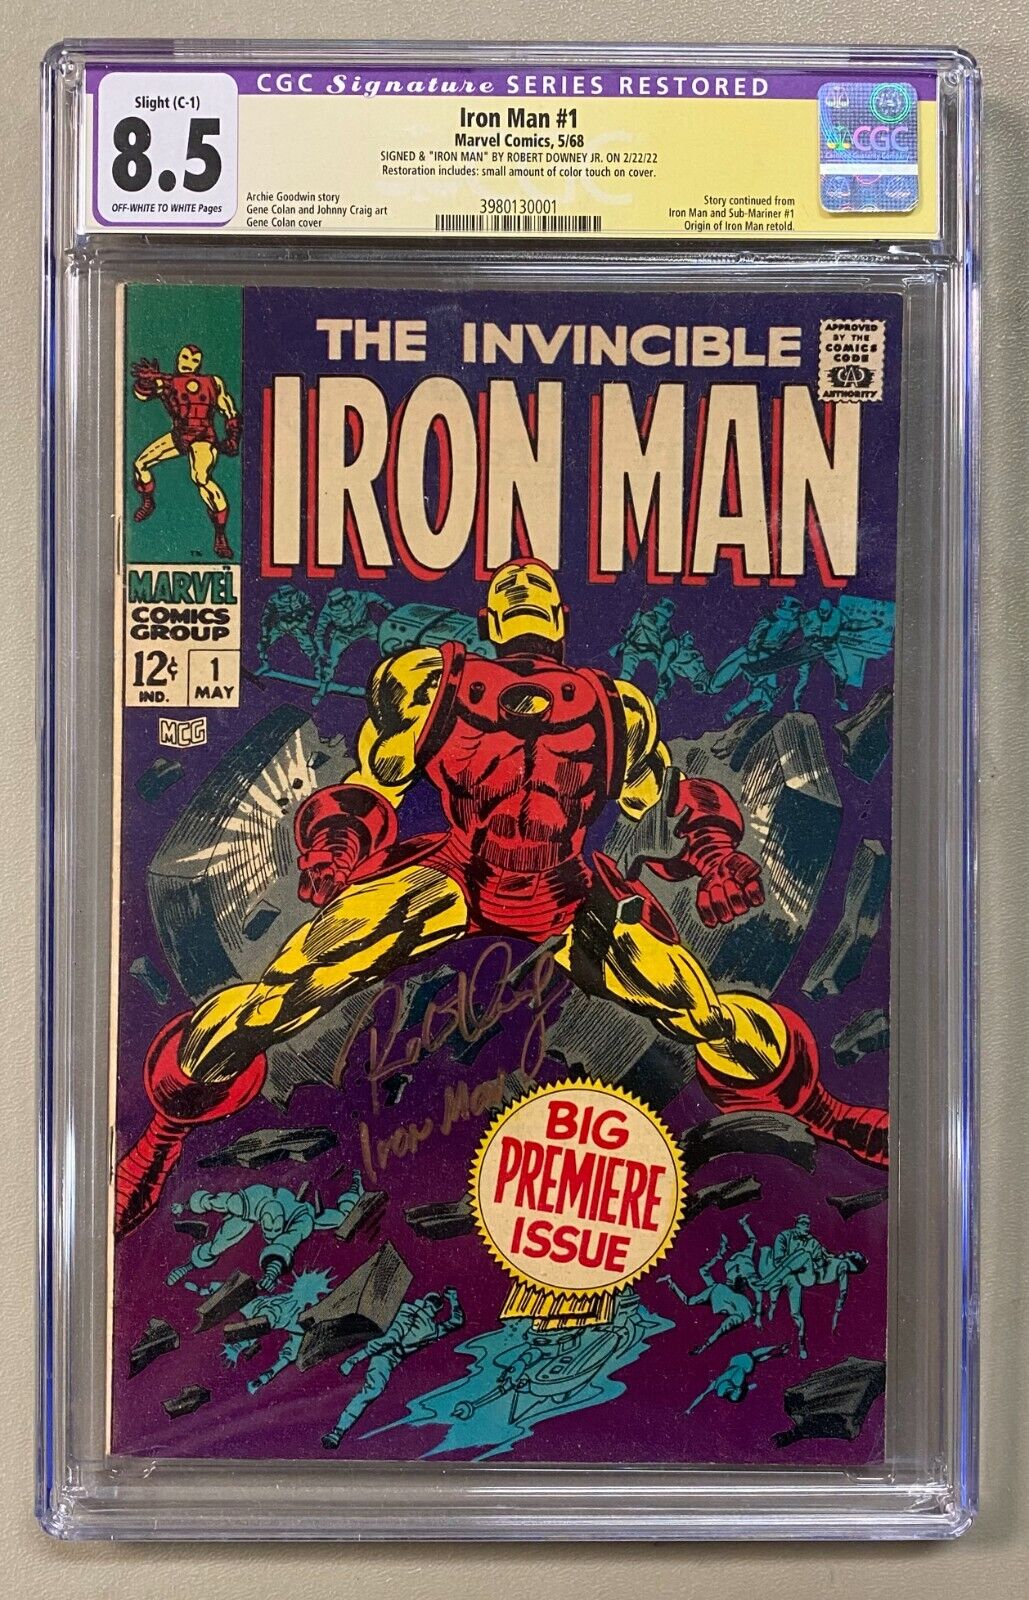 Robert Downey Jr Signed Iron Man 1 Marvel Comics 1968 AUTO CGC 85